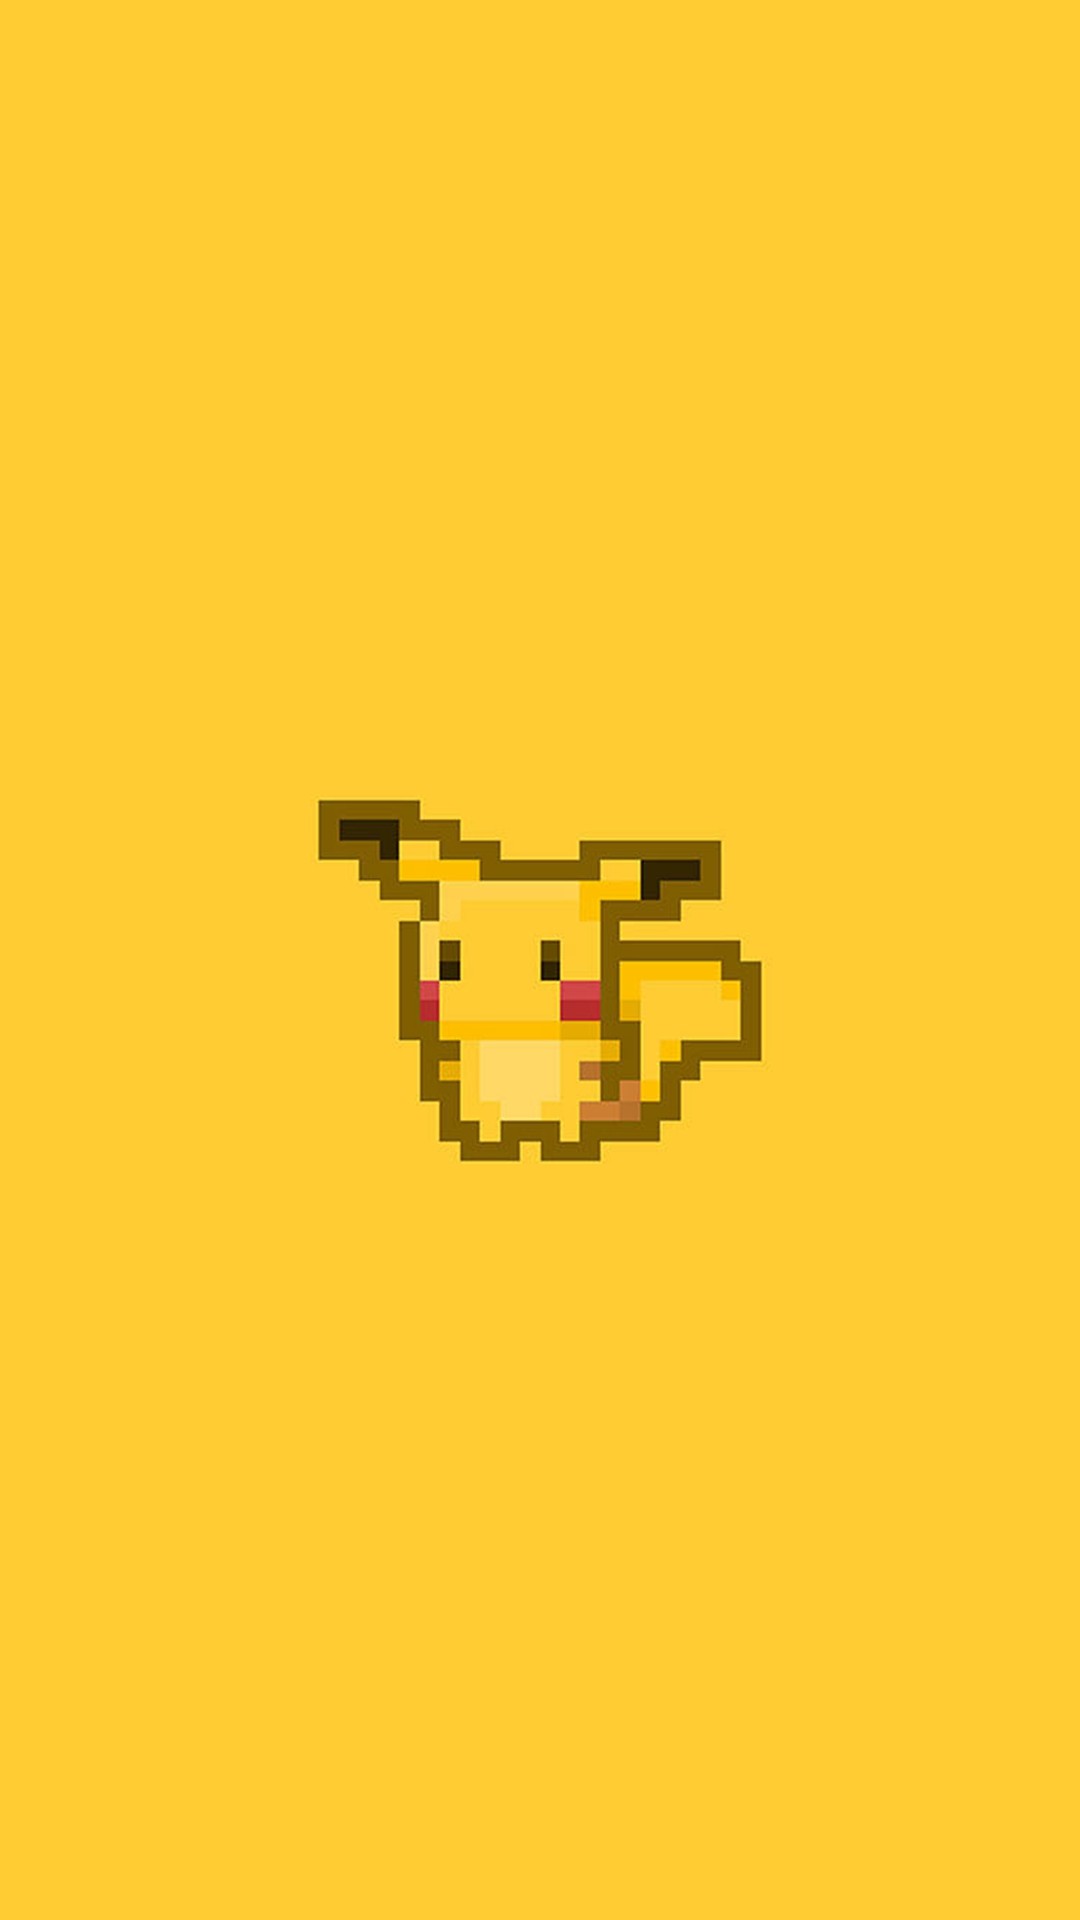 1080x1920 Pikachu Pokemon Pixel Art iPhone 8 wallpaper